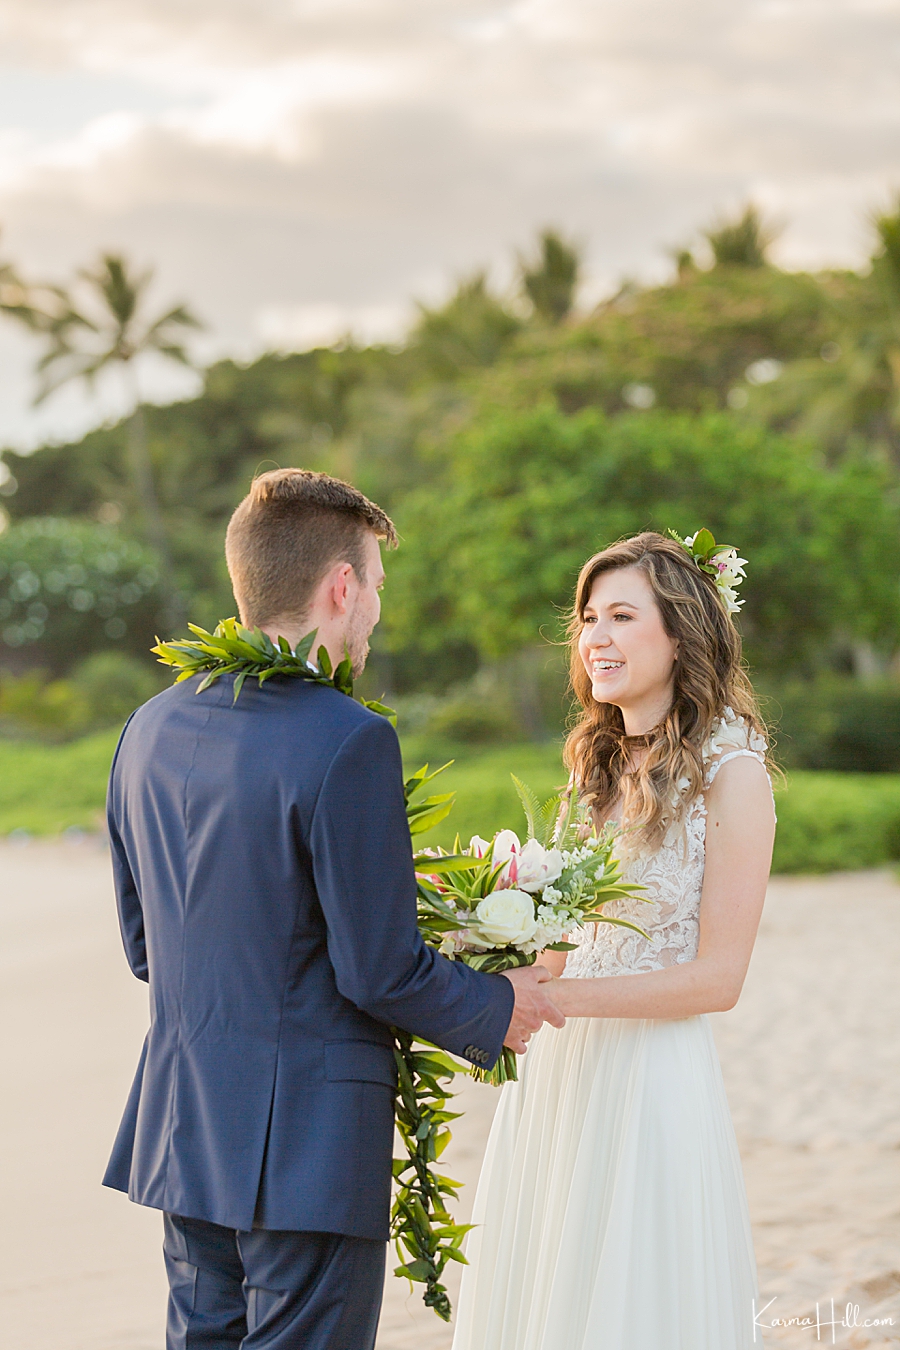 Vows for a Maui Wedding